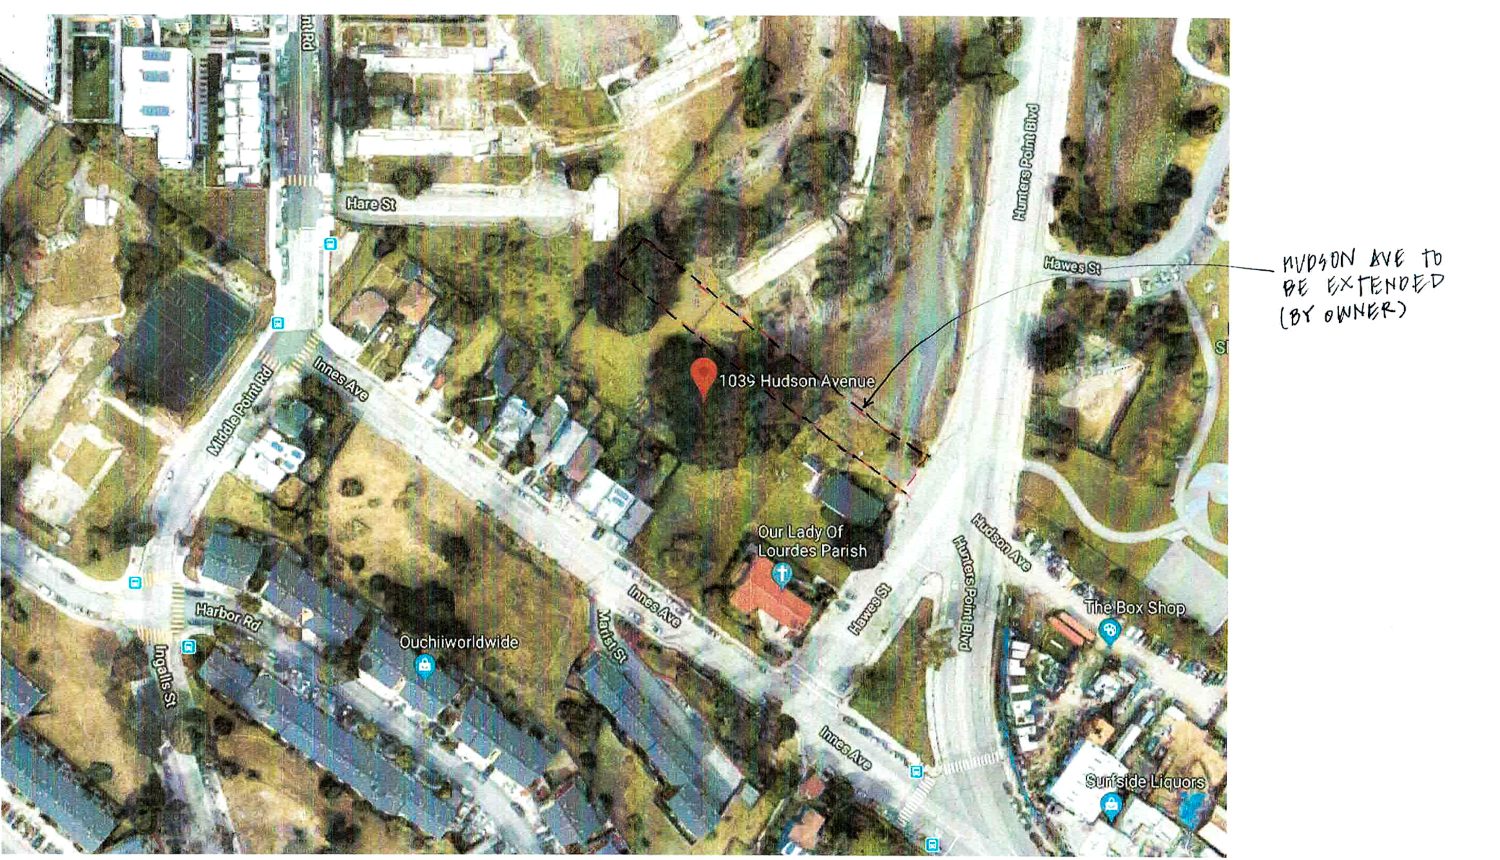 1039 Hudson Avenue site map, illustration via planning documents